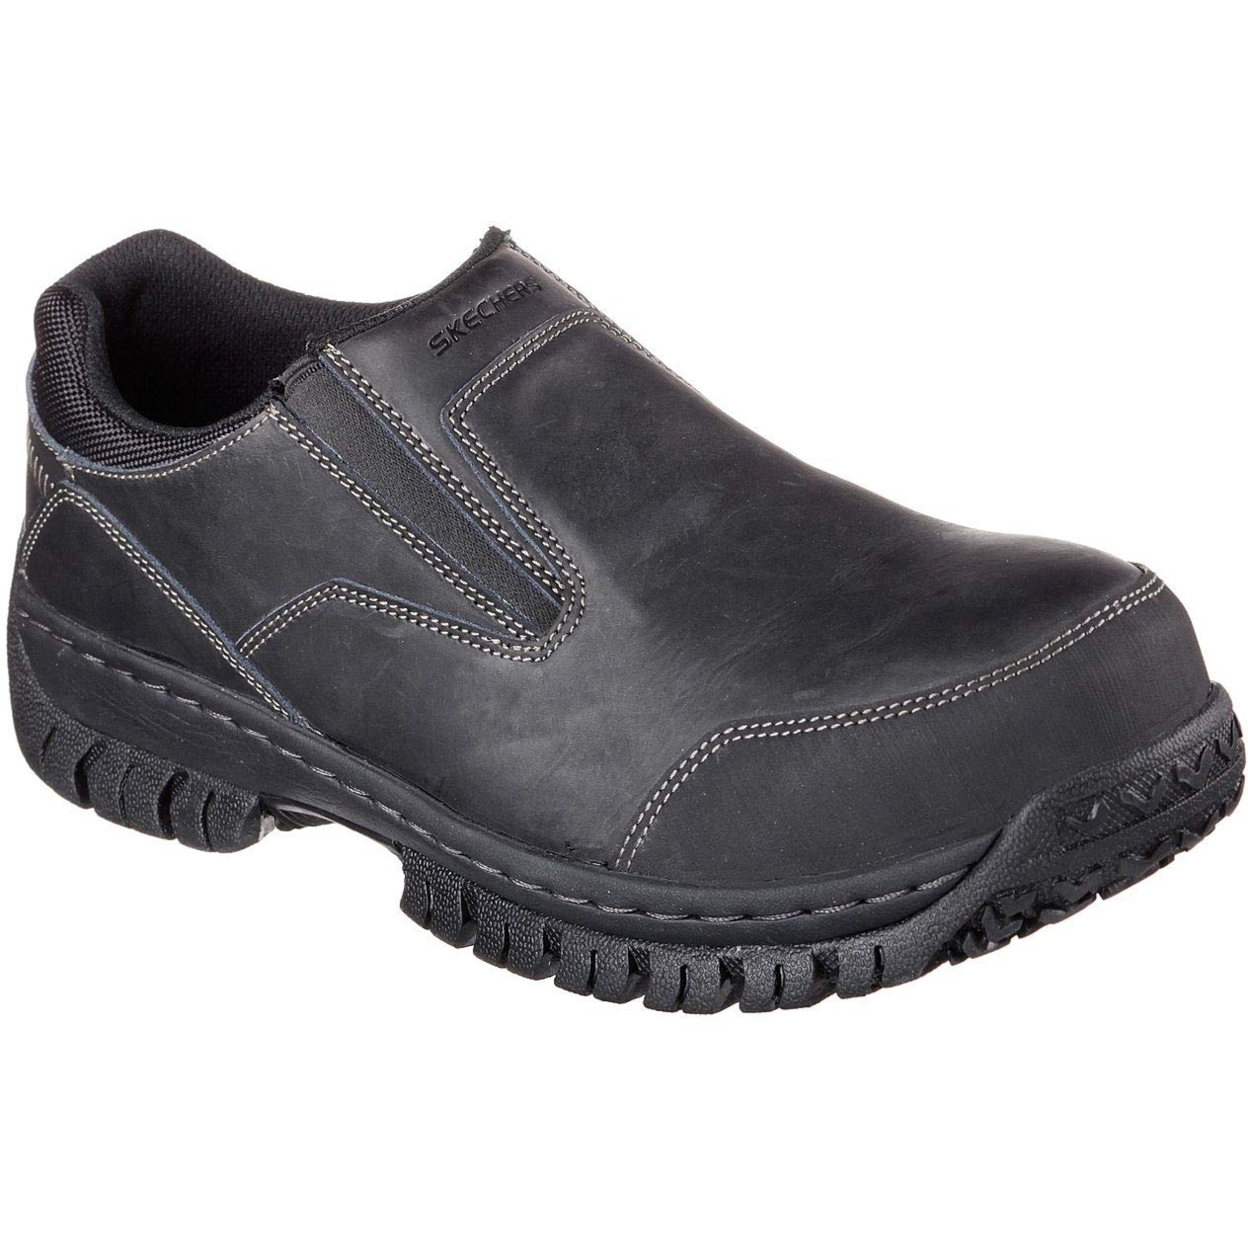 Skechers For Work Men's Hartan Steel Toe Slip-On Shoe Varies BLACK - BLACK, 8.5